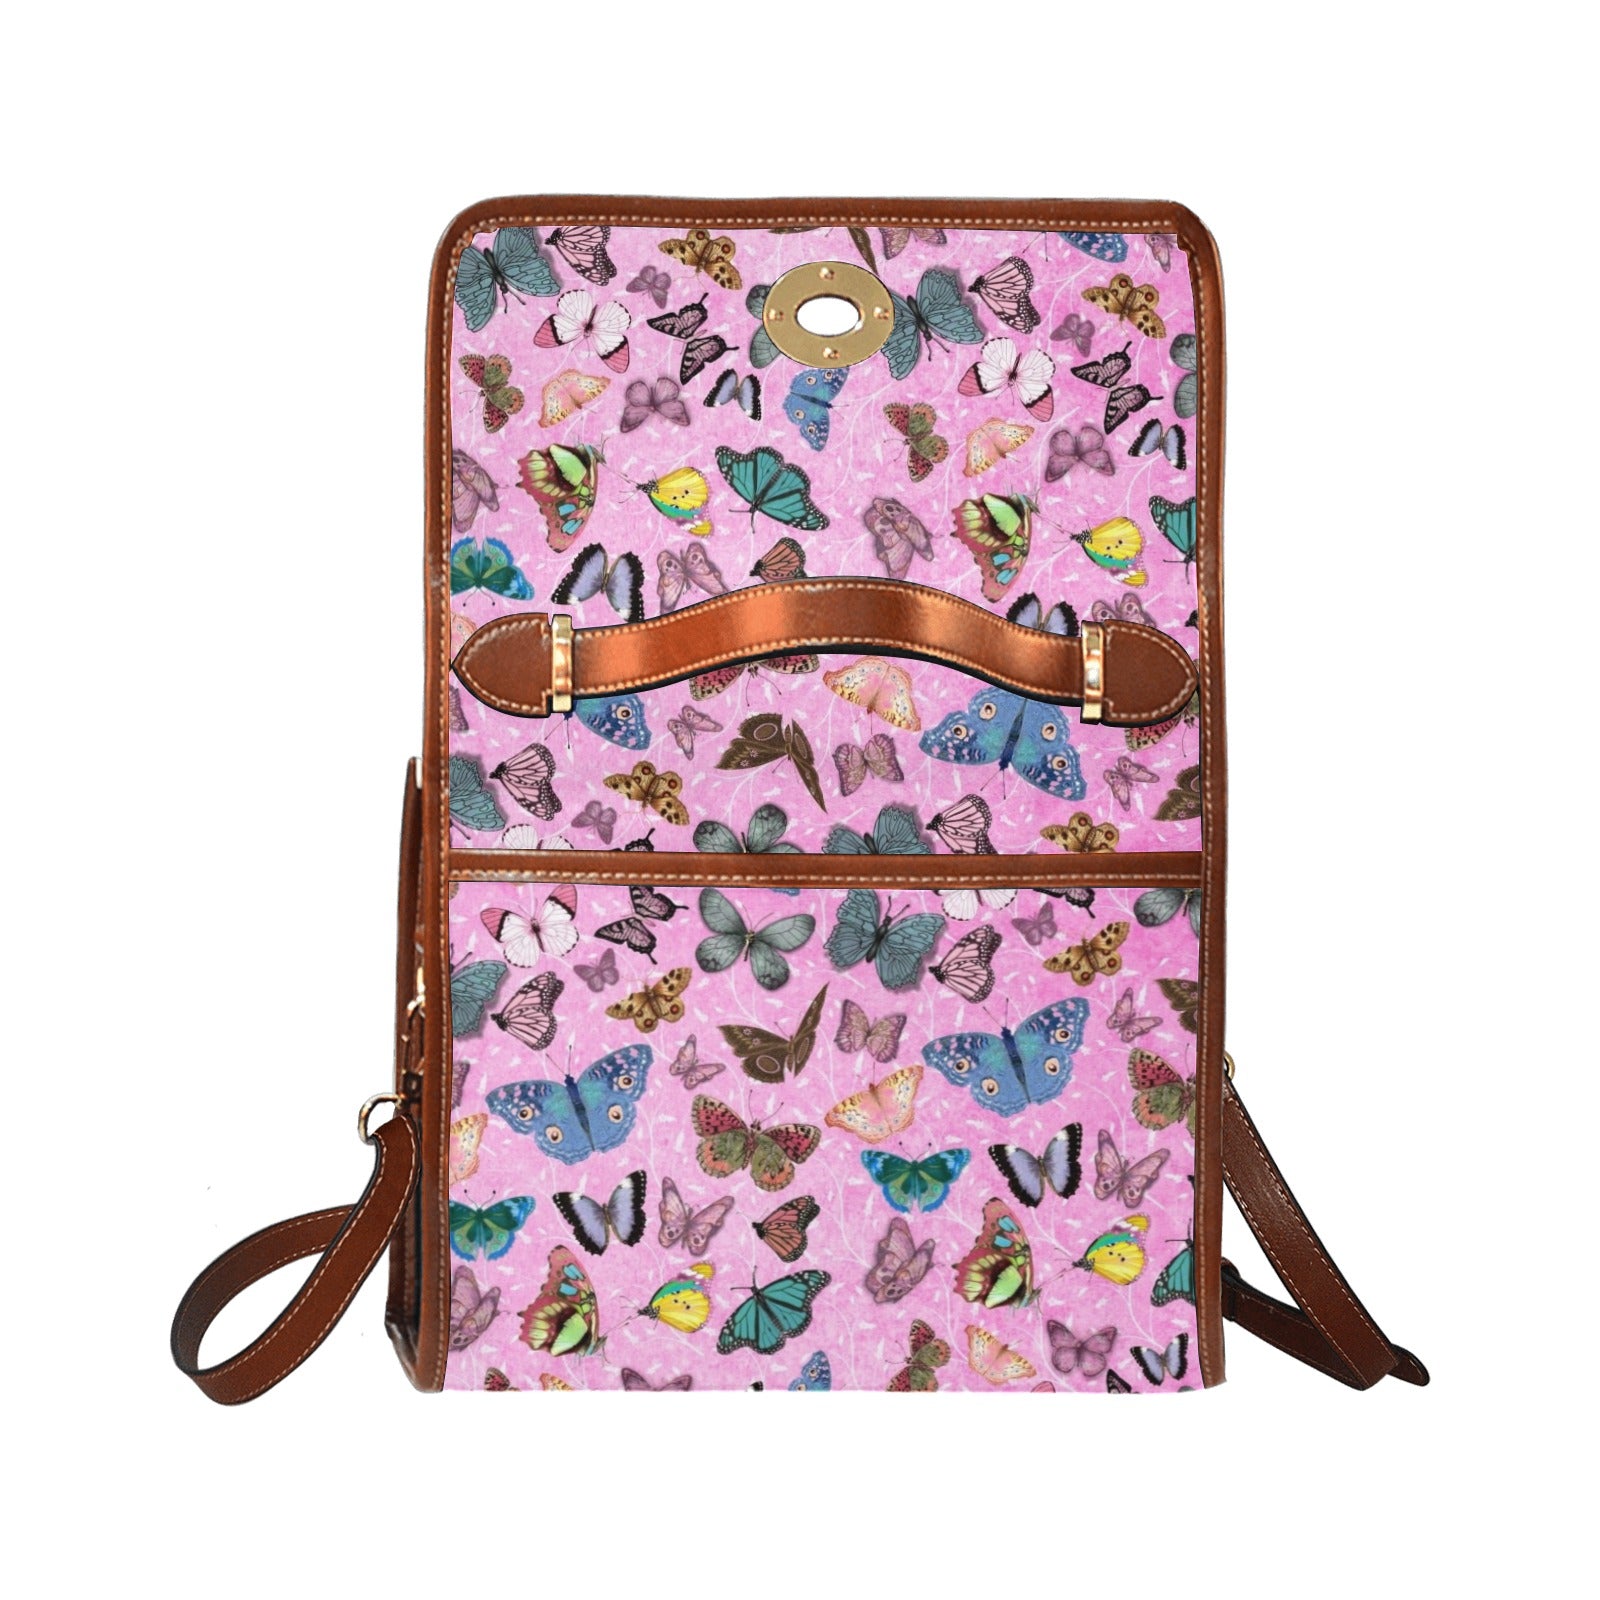 Butterfly Pink - Waterproof Canvas Handbag